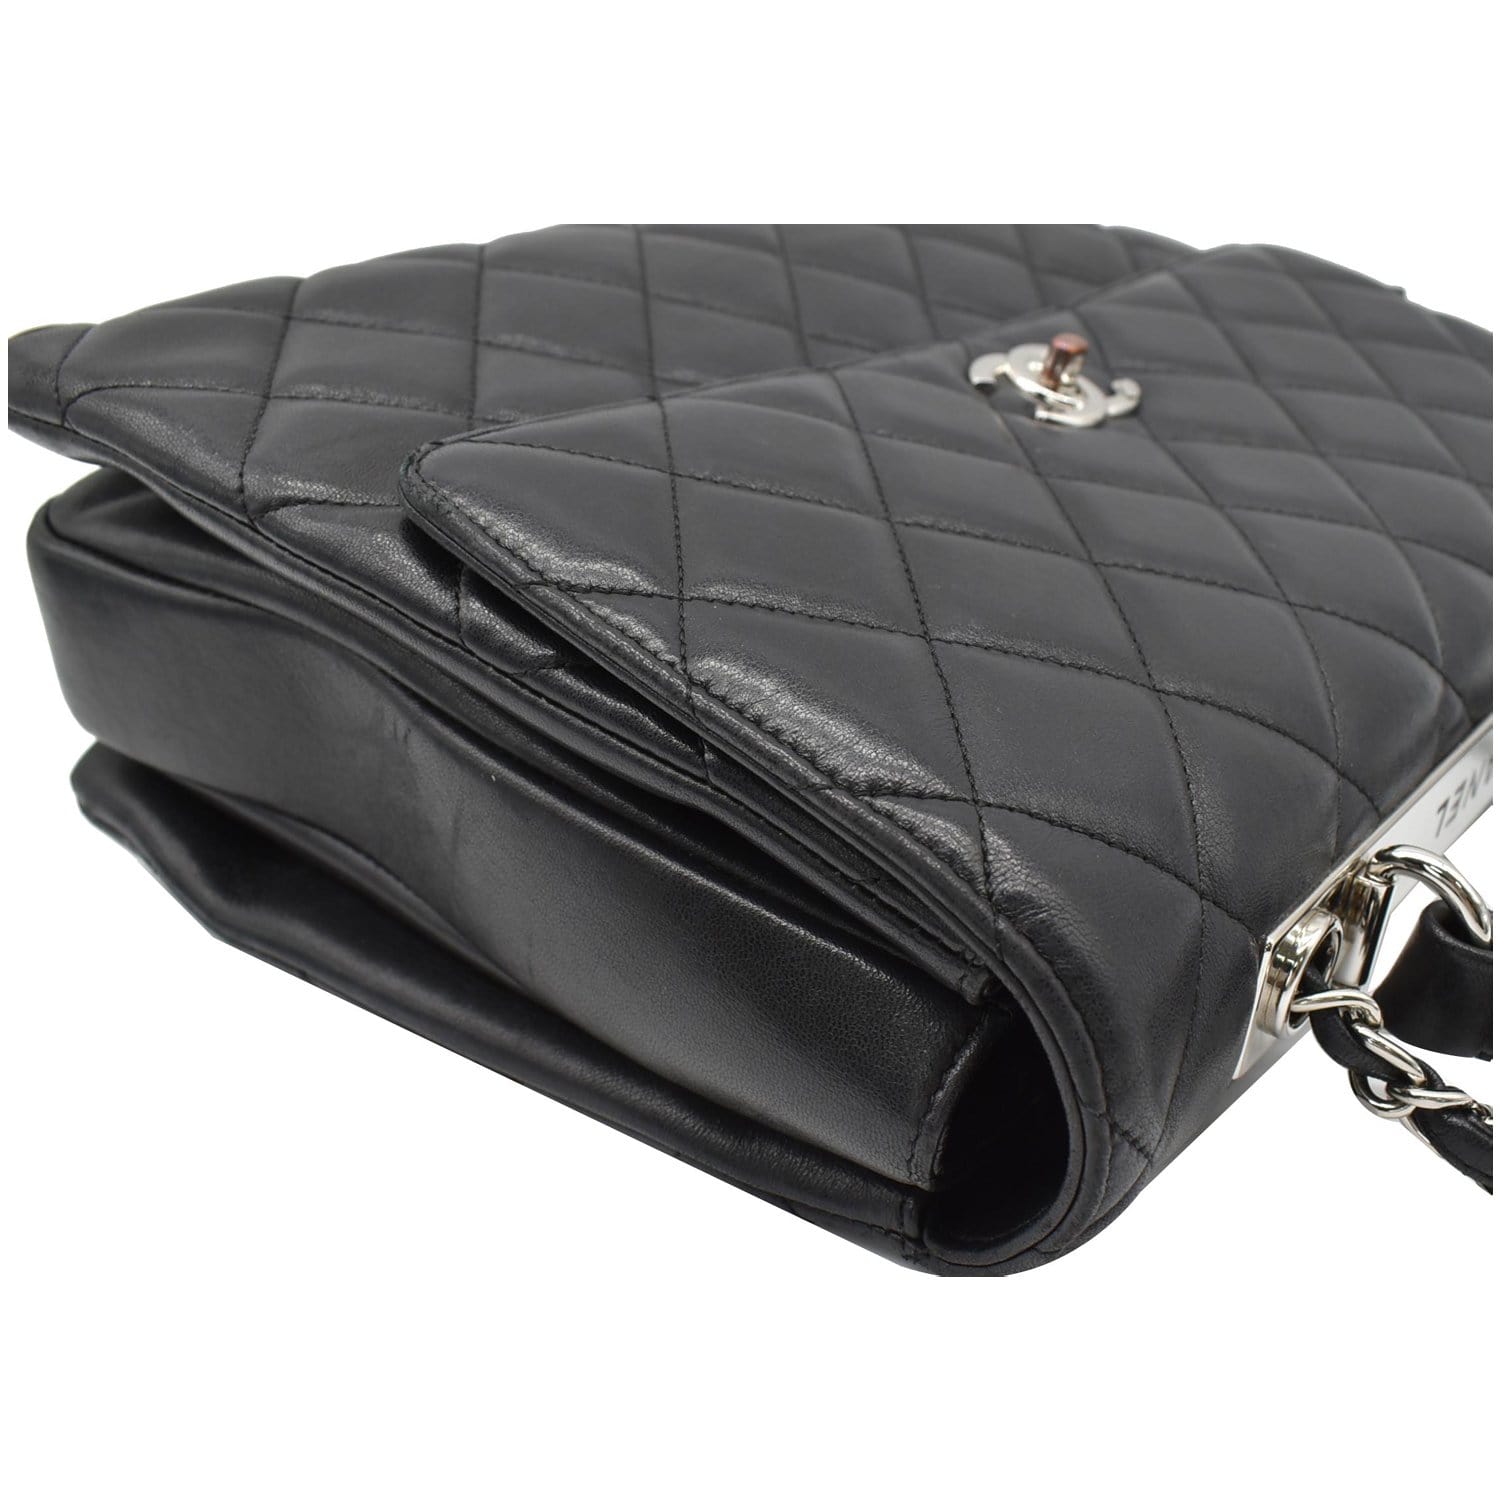 Chanel Trendy CC Bag, Metallic Gray Leather